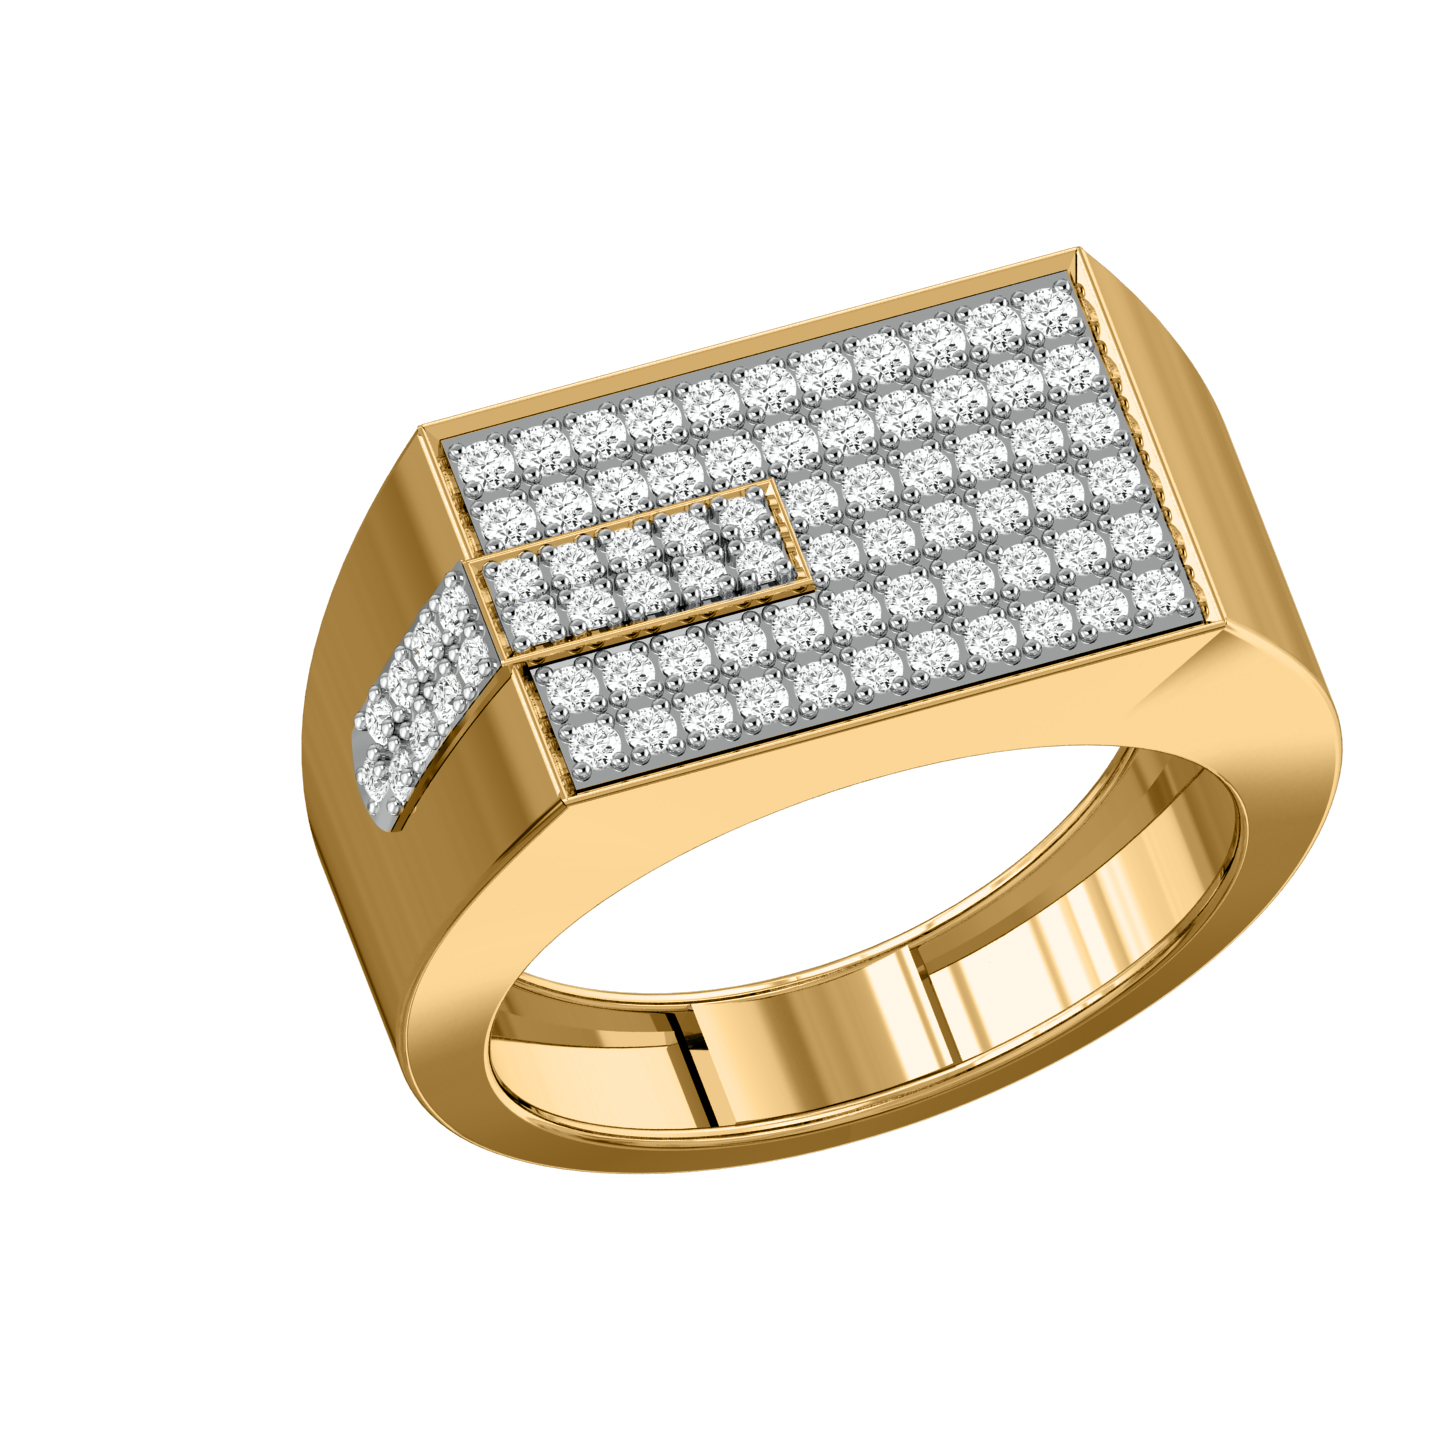 Shop Scott Men's Diamond Ring Online at Best Price